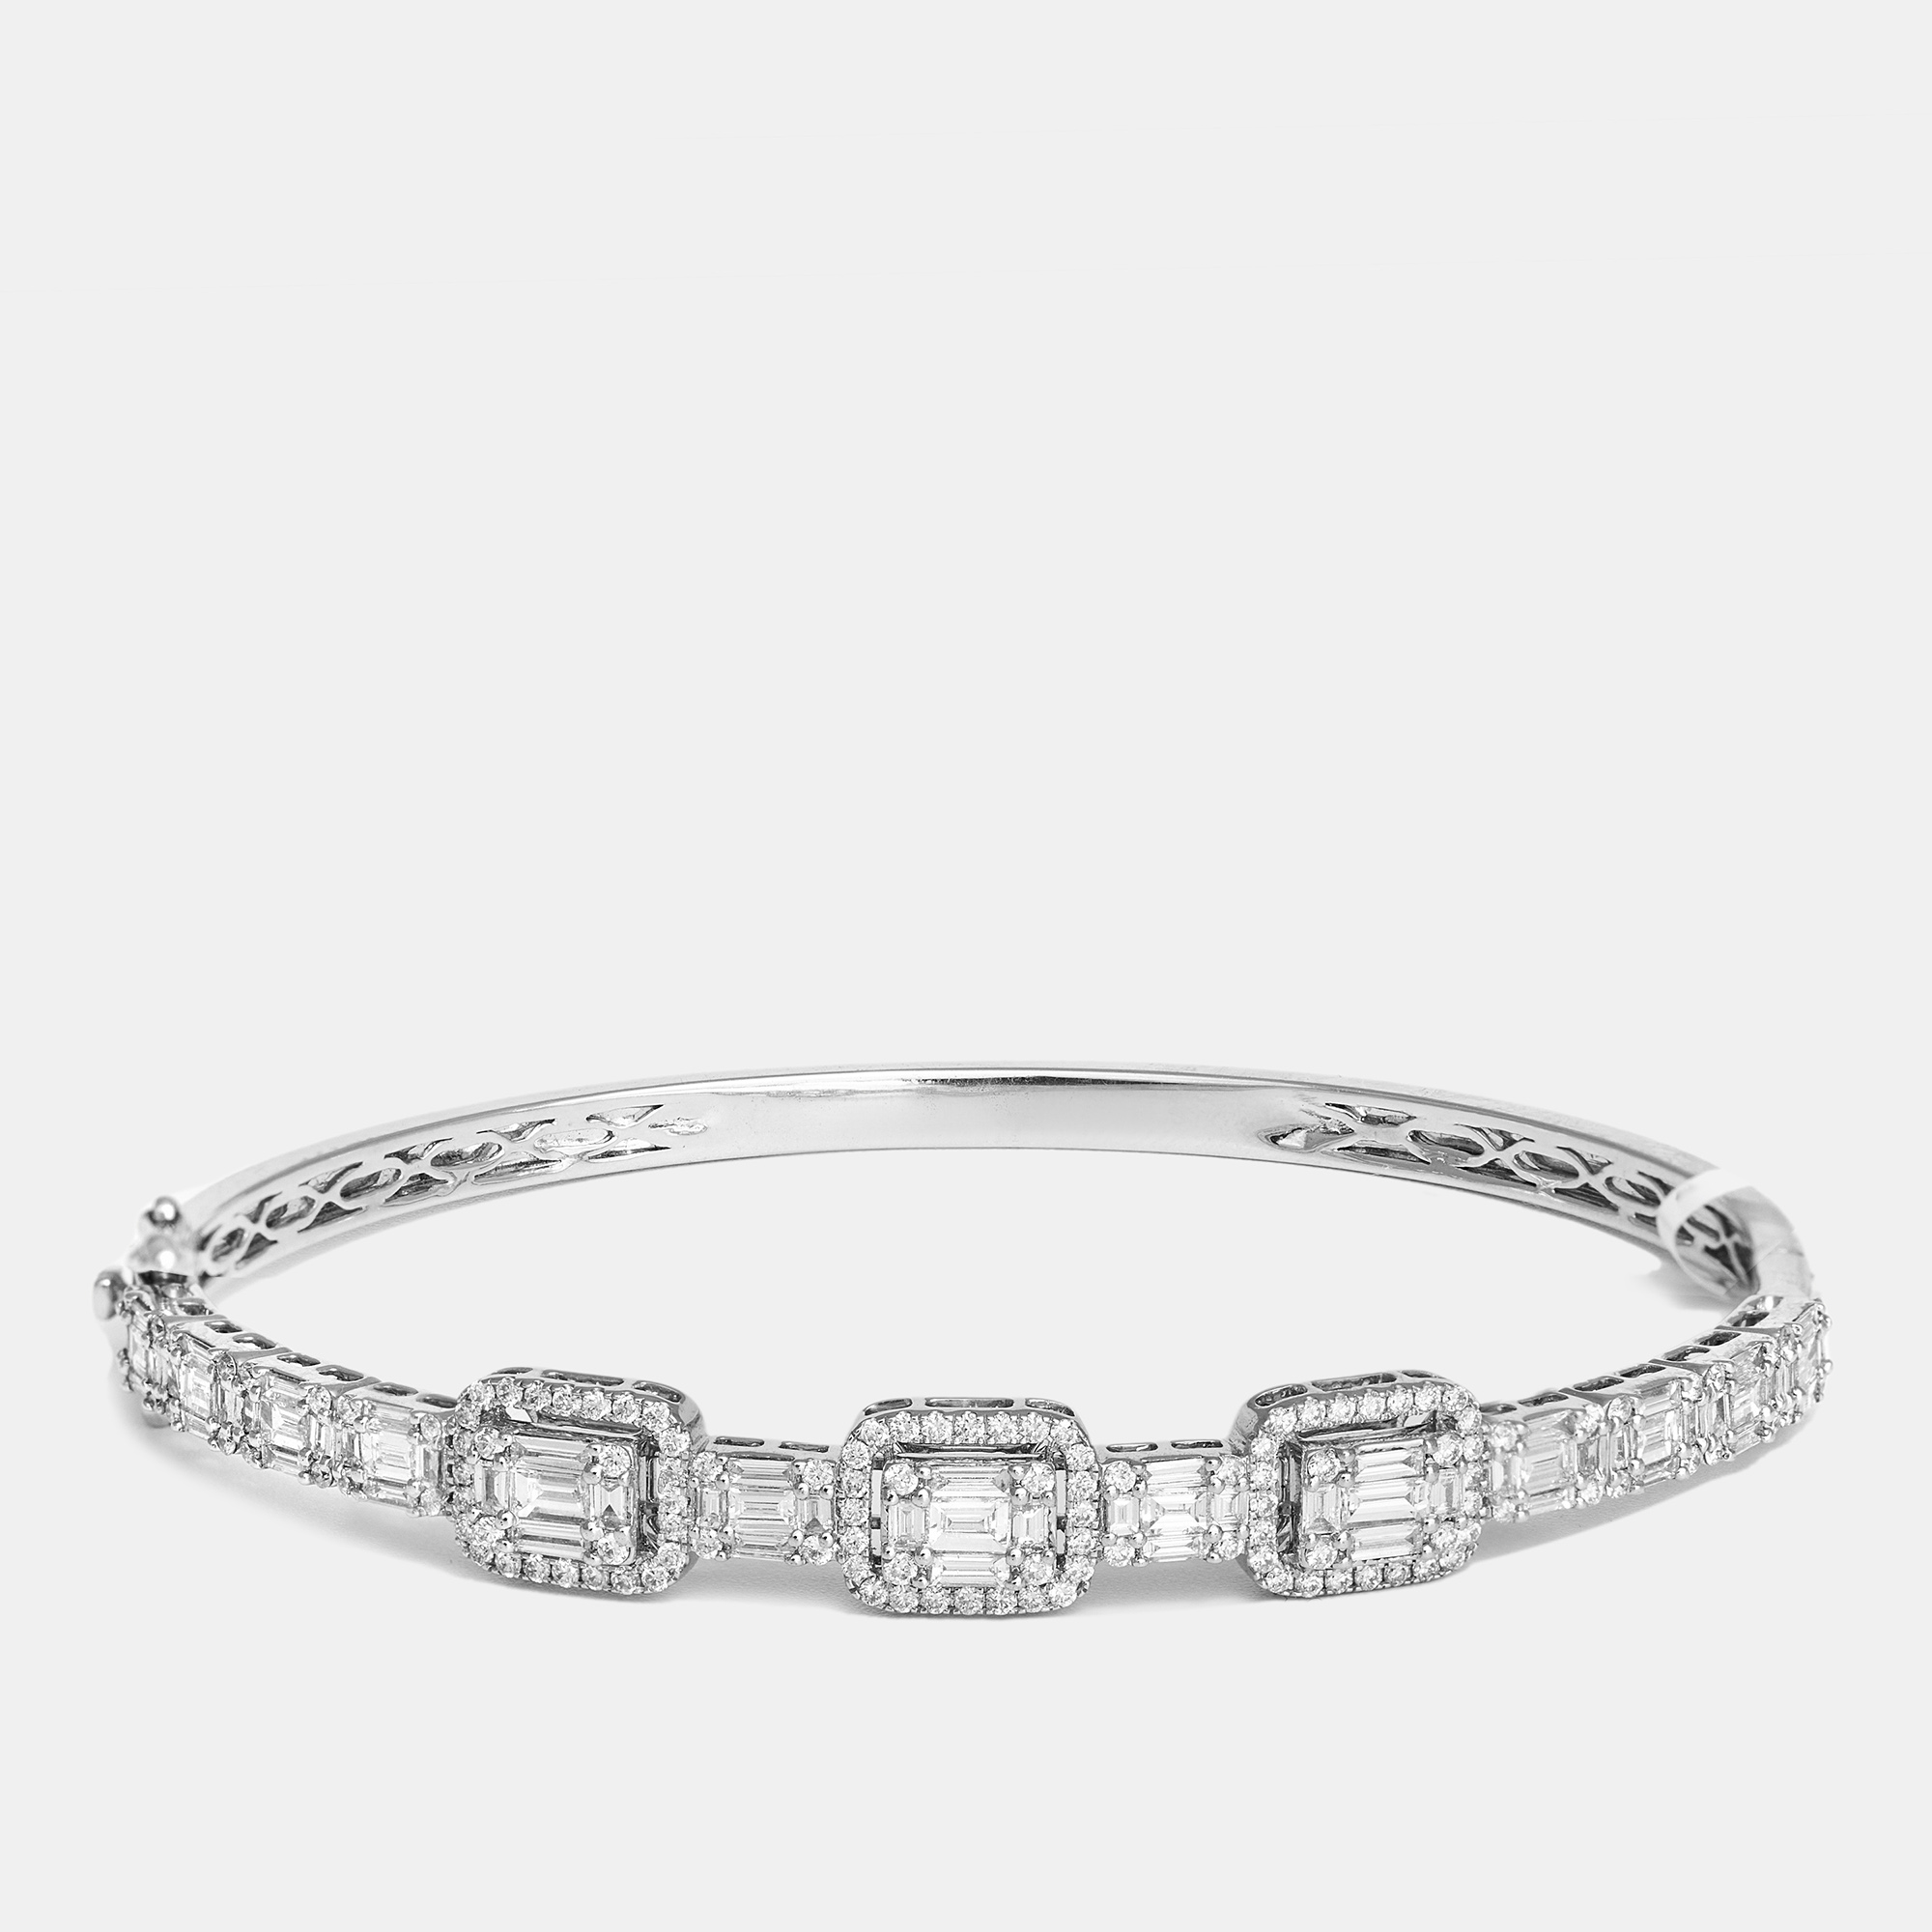 The diamond edit 18k white gold  bangle bracelet